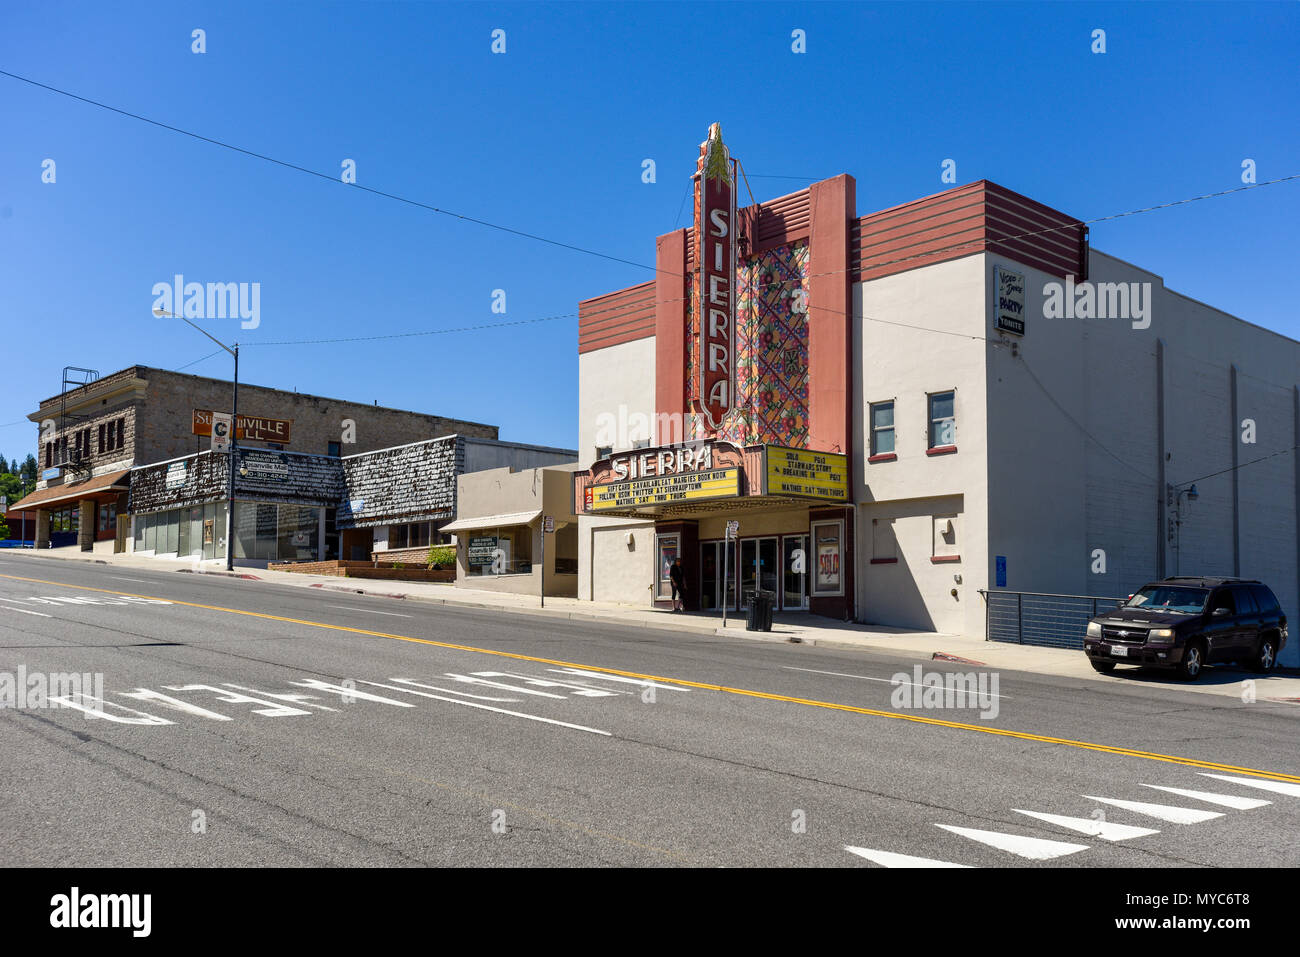 Sierra Theater in Susnville, California Stock Photo